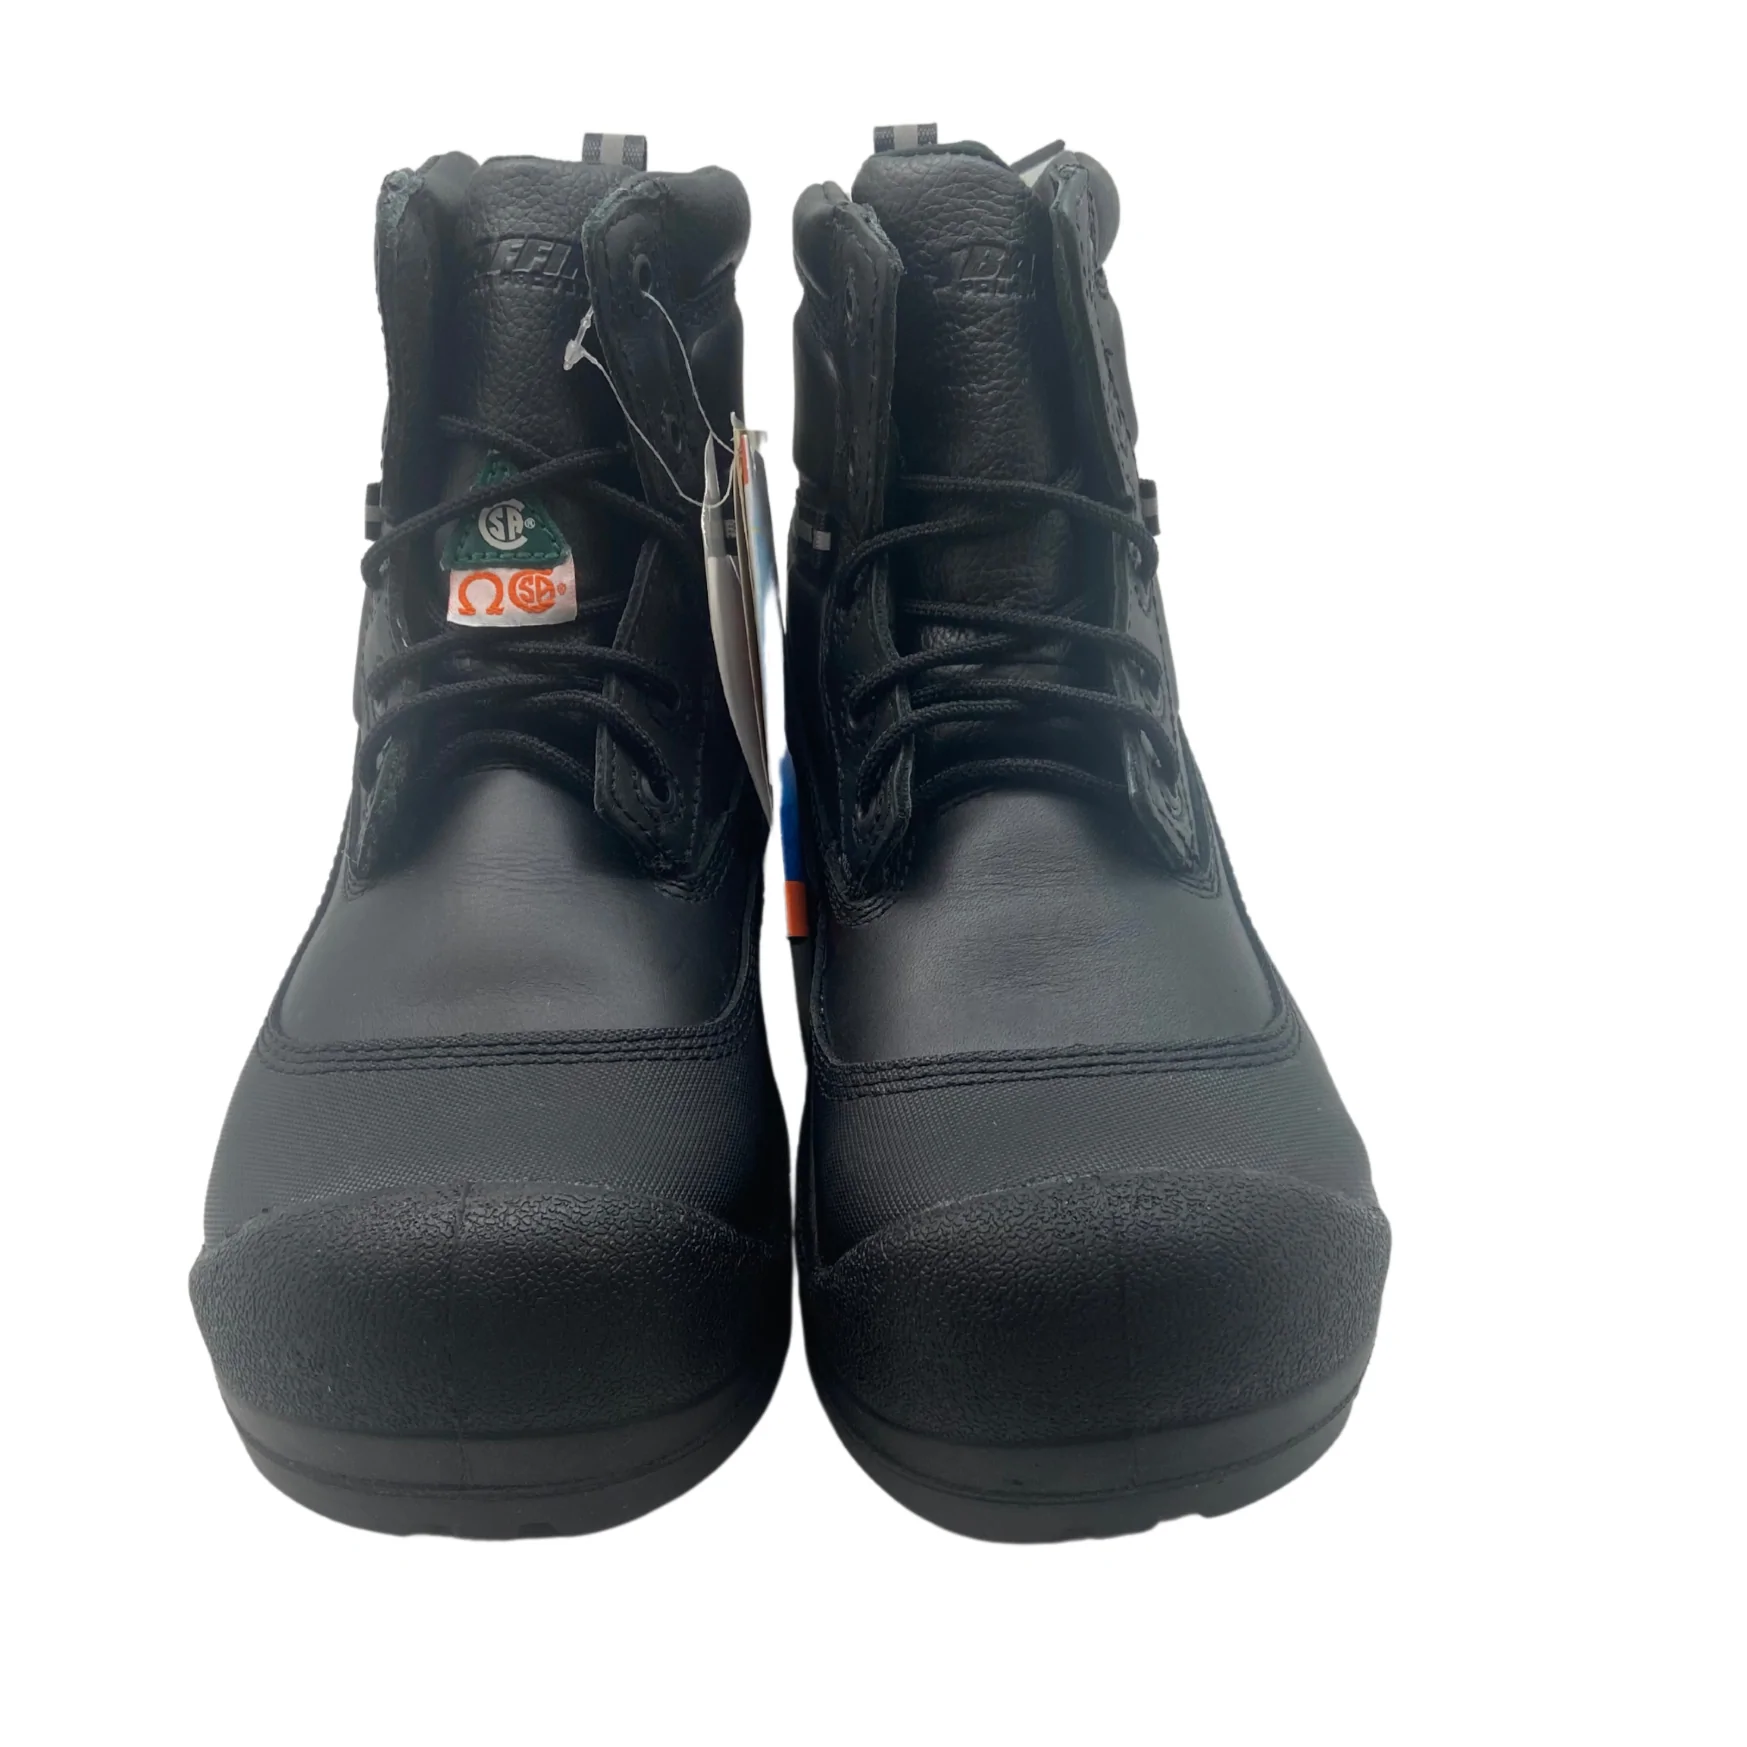 Baffin: Men's Boots / Work Boots / 6 Inch / Black / Size 8